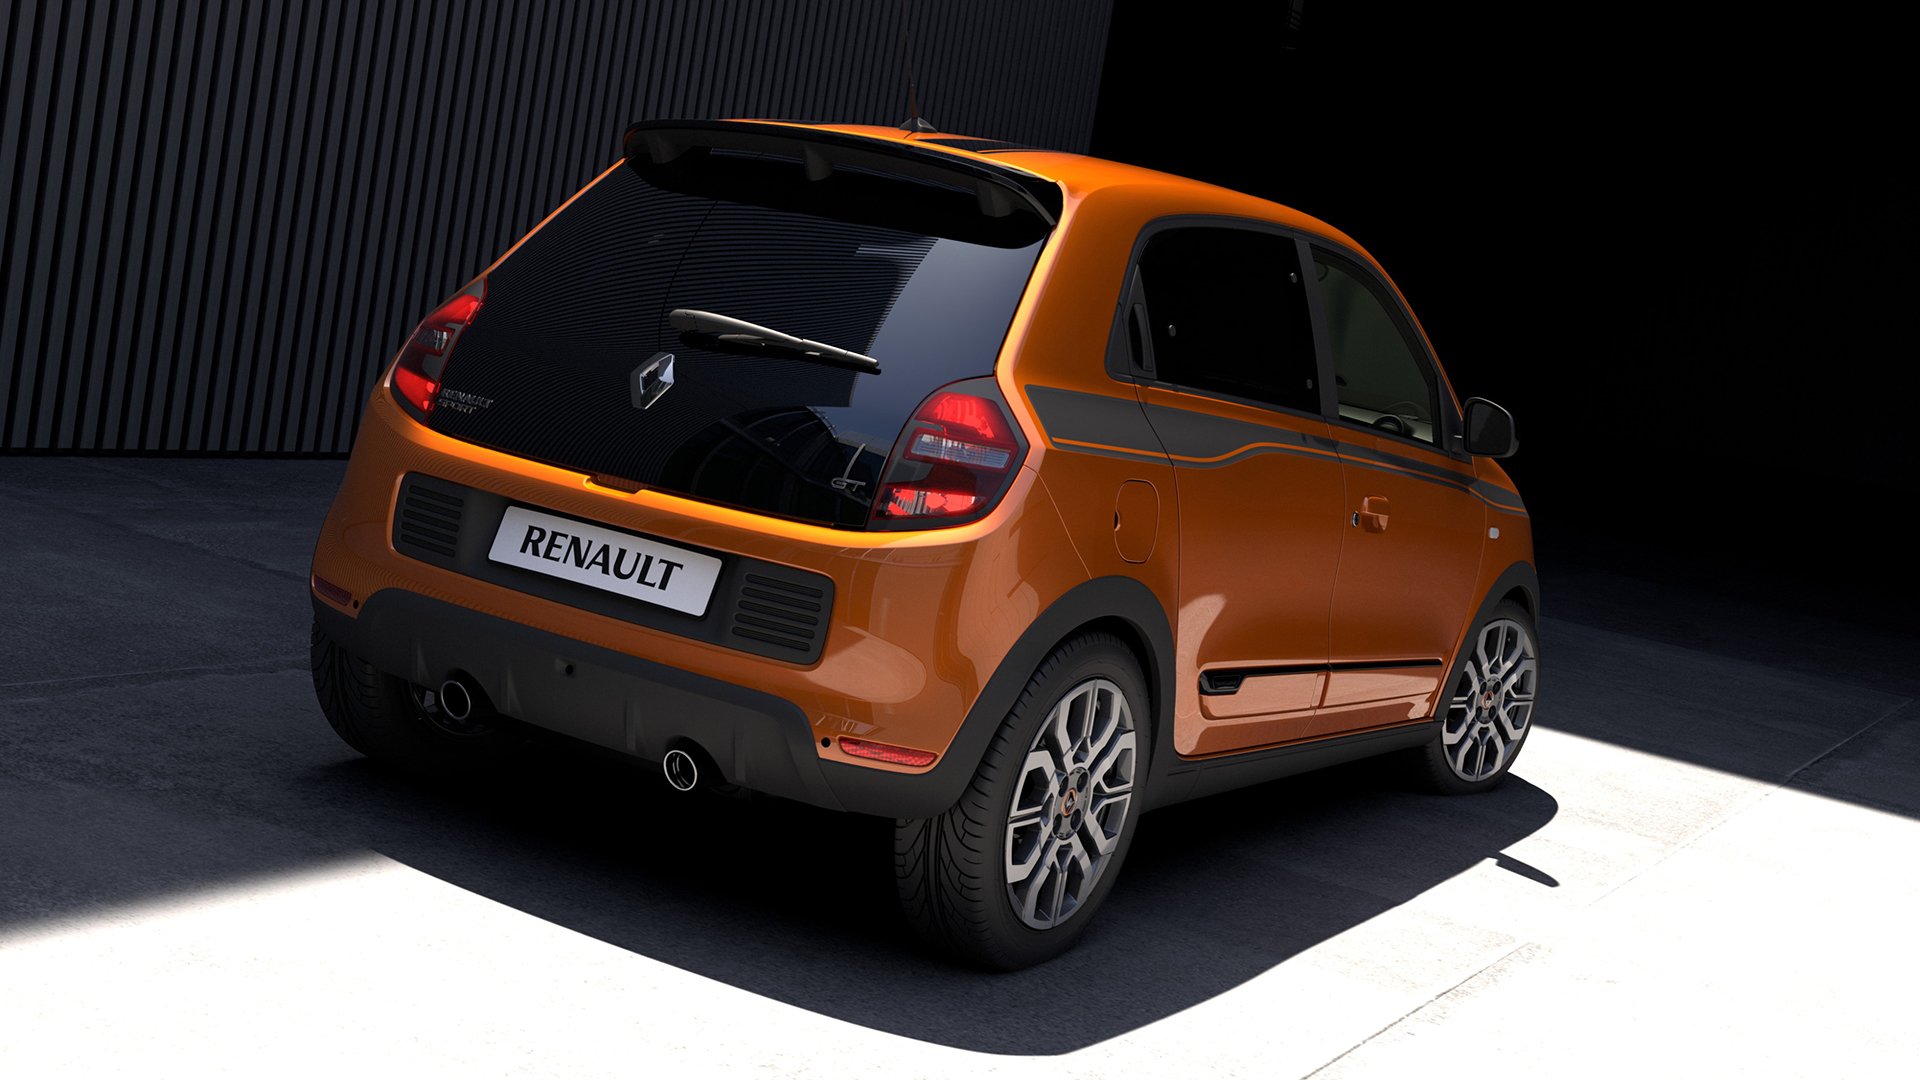 Renault unveils hot hatch version of its Twingo city car